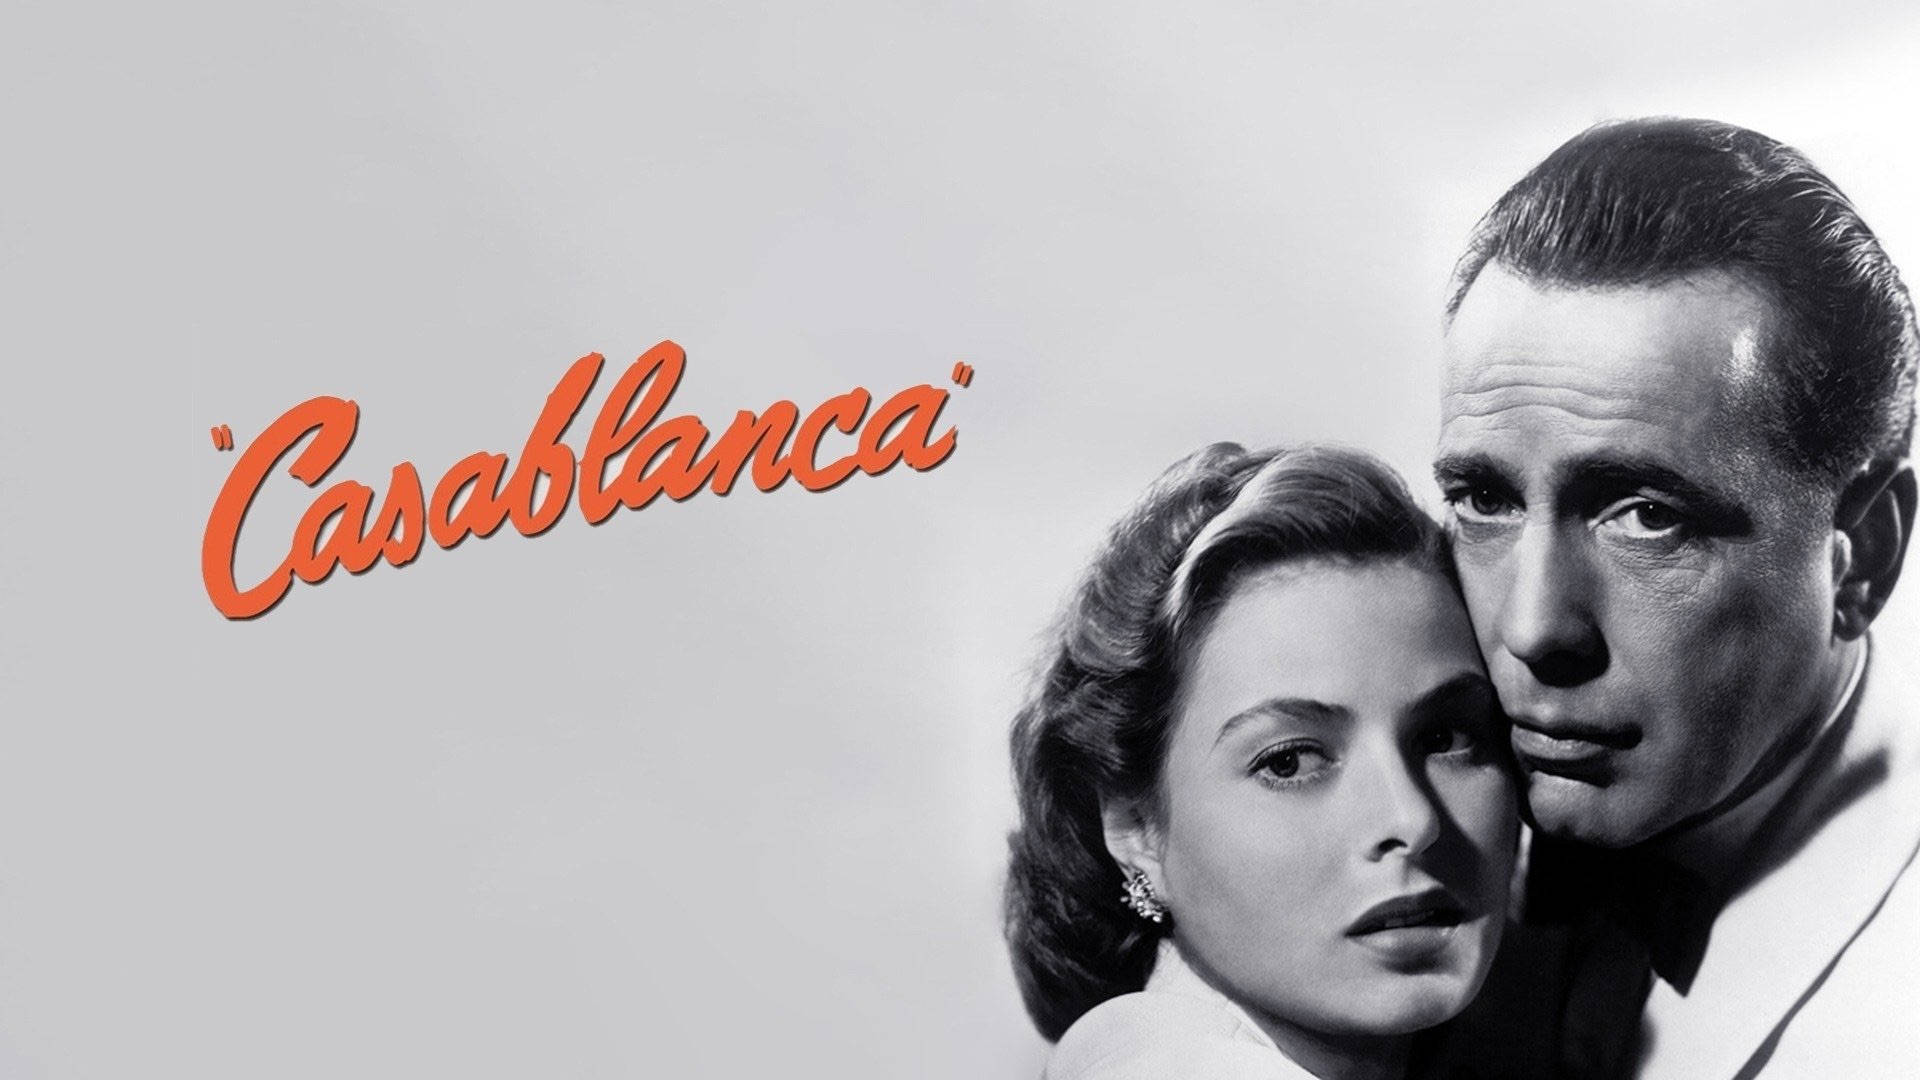 Casablanca Gray Aesthetic Wallpaper